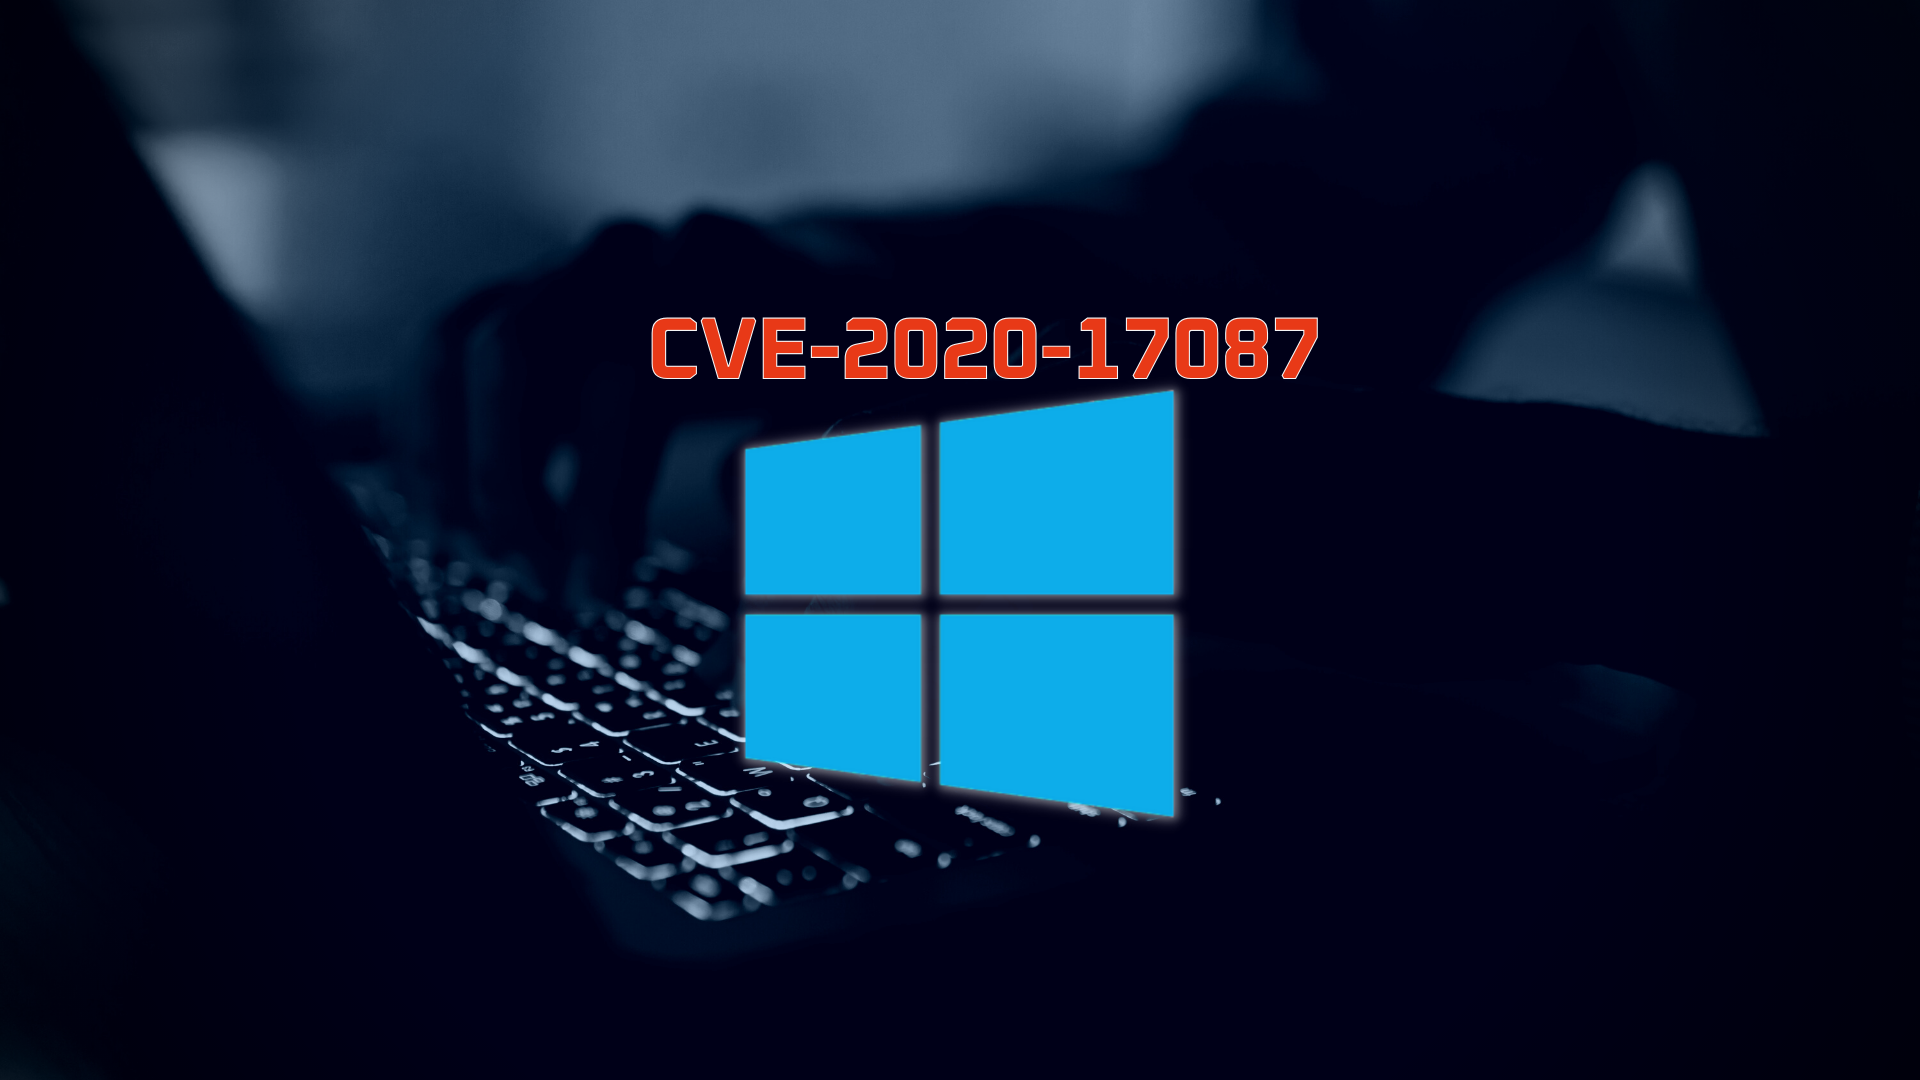 Windows Kernel Drive Vulnerability Research:  CVE-2020-17087